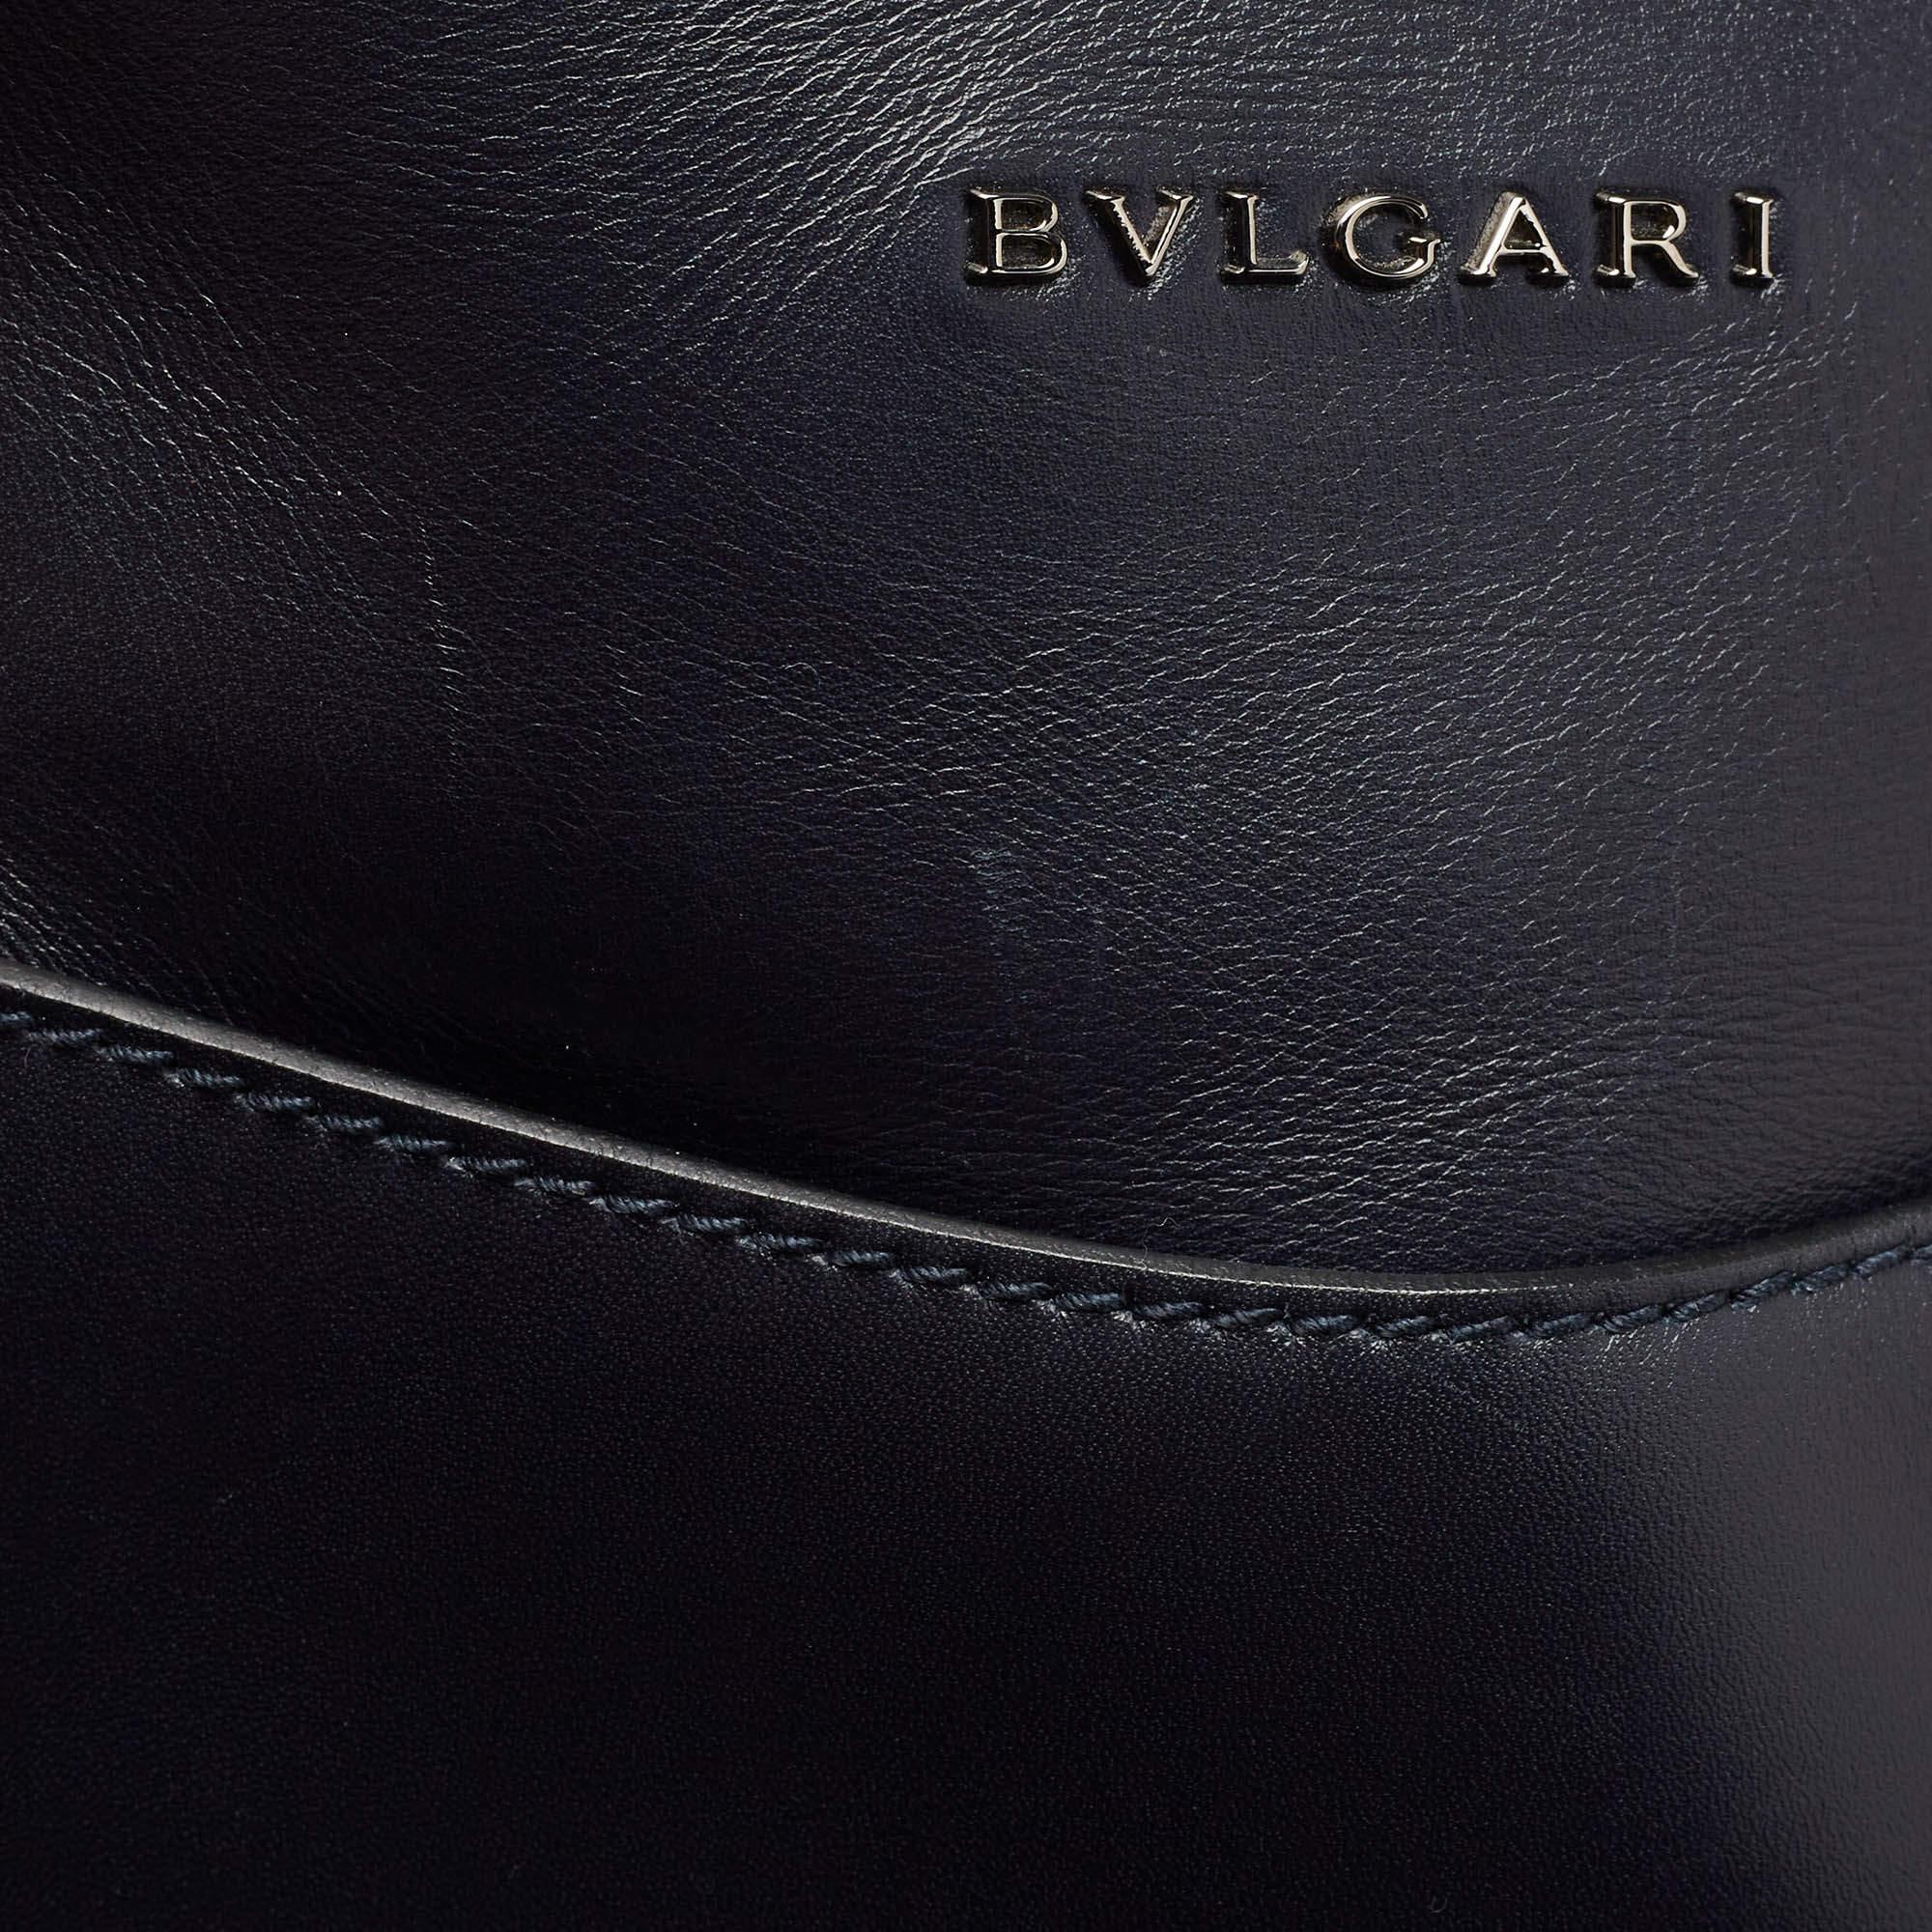 Bvlgari Black Leather Zip Satchel For Sale 9